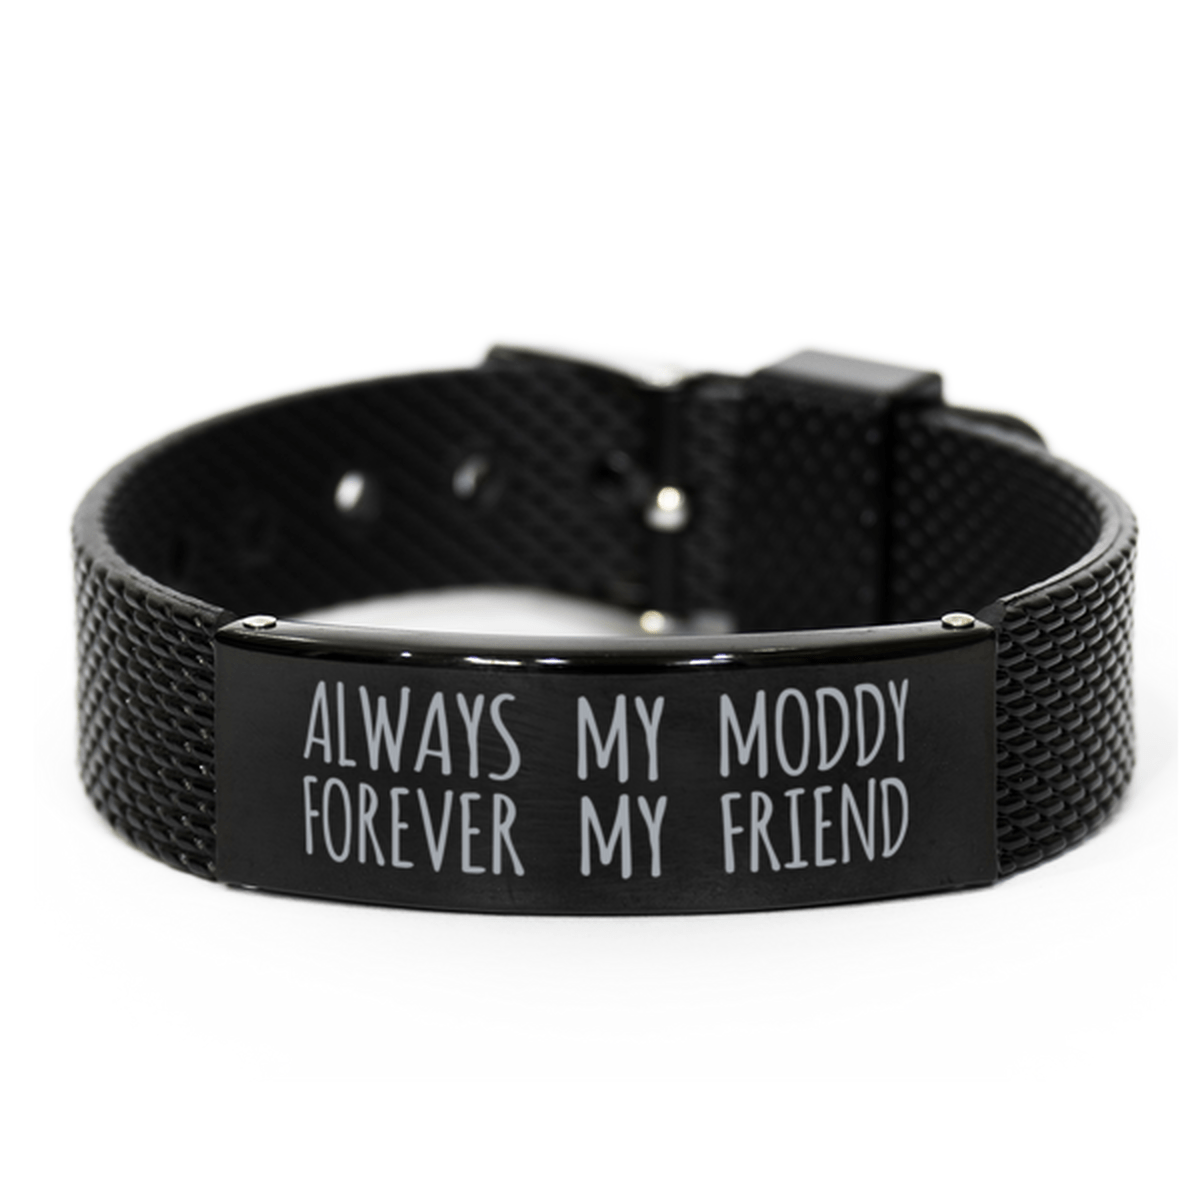 Inspirational Moddy Black Shark Mesh Bracelet, Always My Moddy Forever My Friend, Best Birthday Gifts for Family Friends